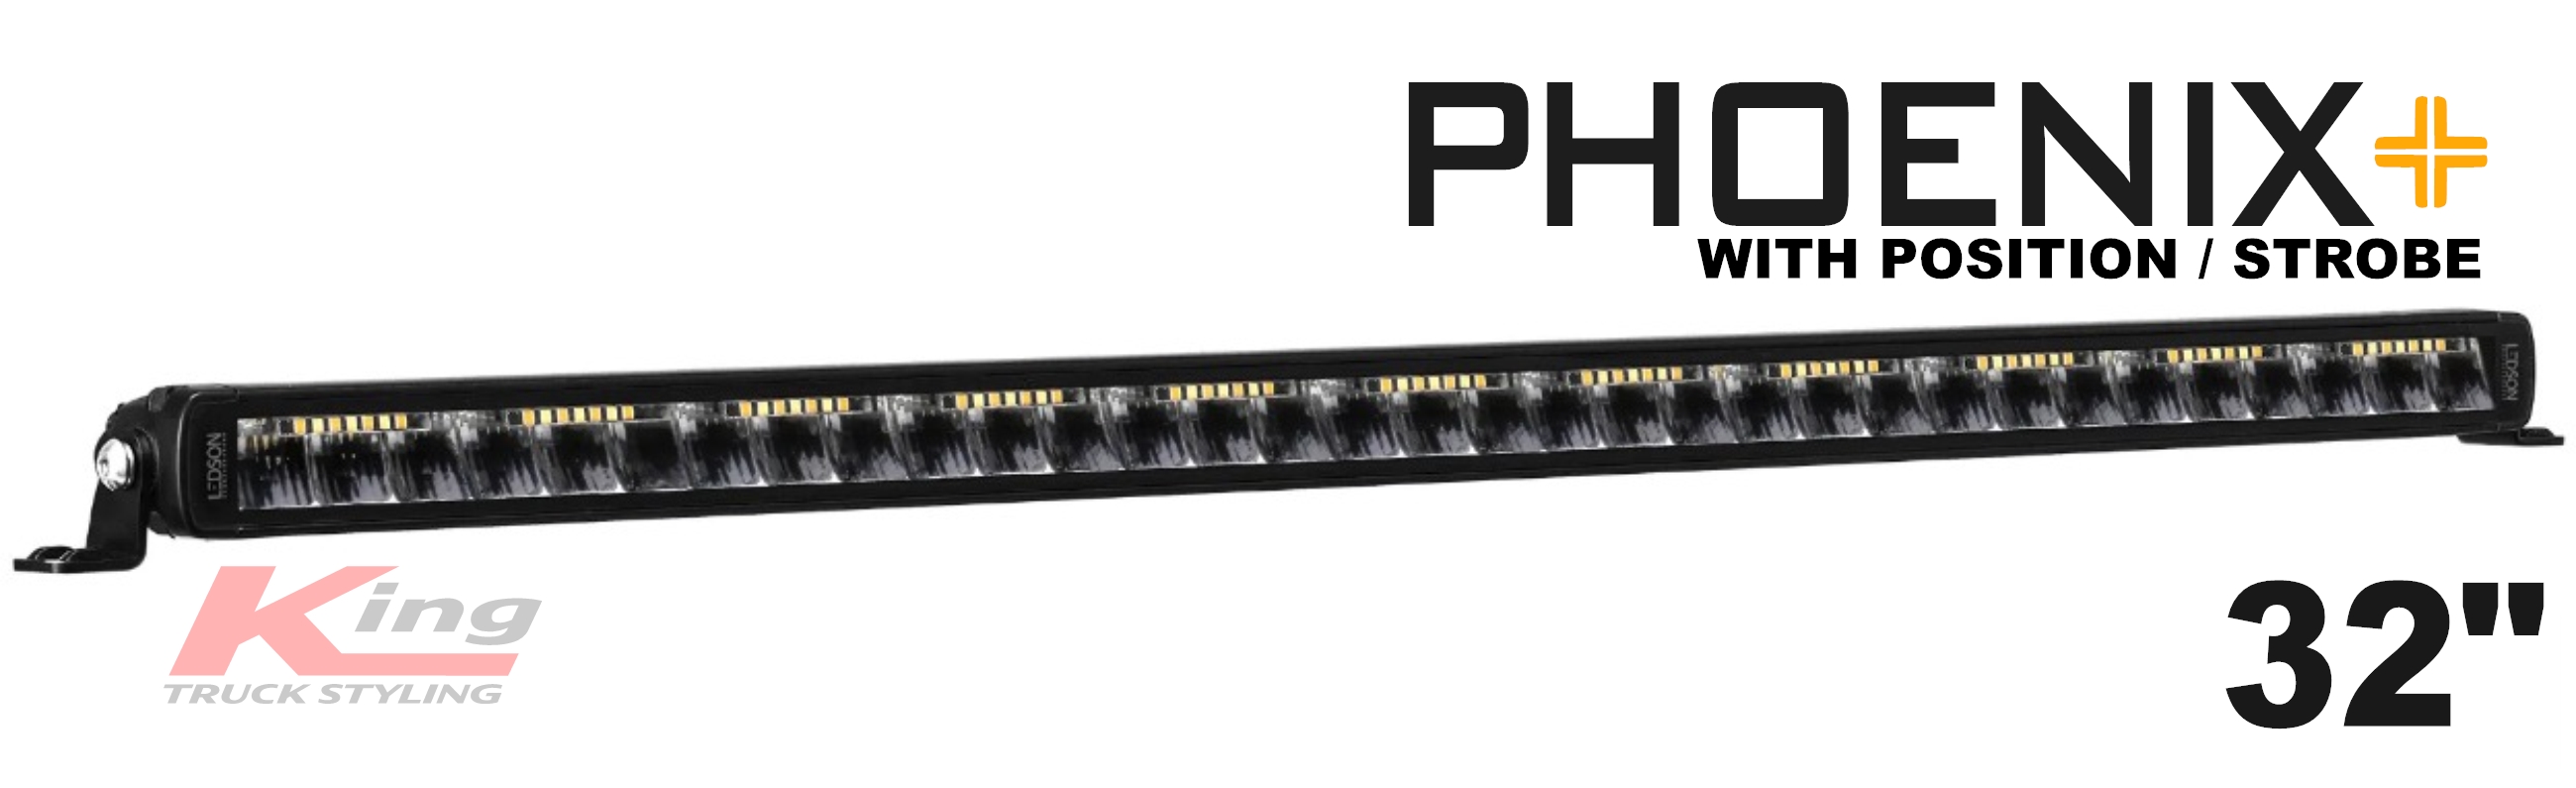 LEDSON Phoenix+ LED Bar / Position Light